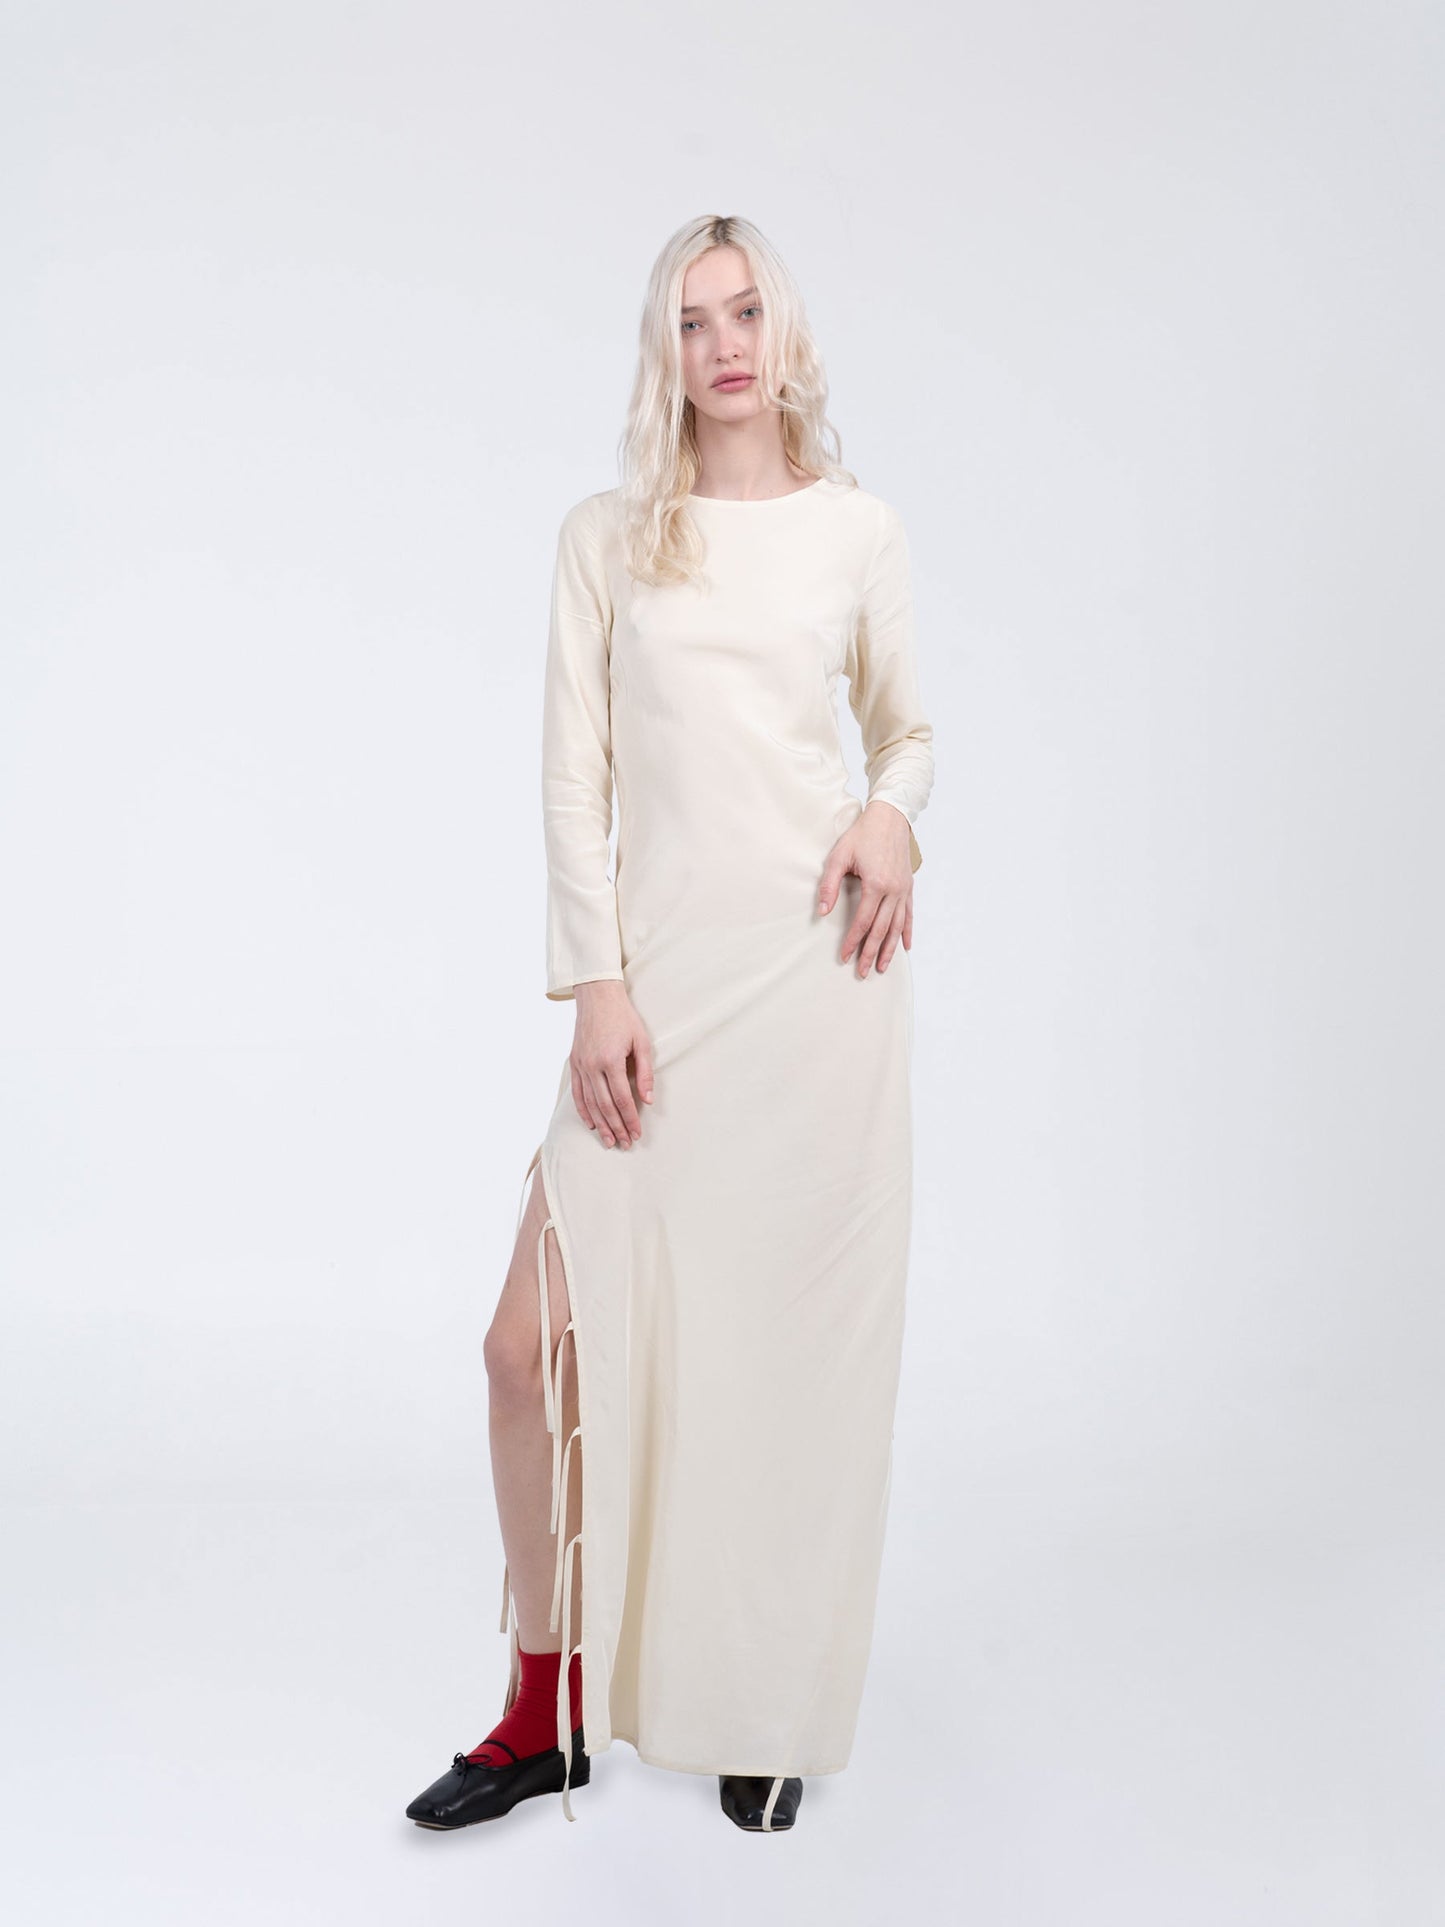 Ivory dress